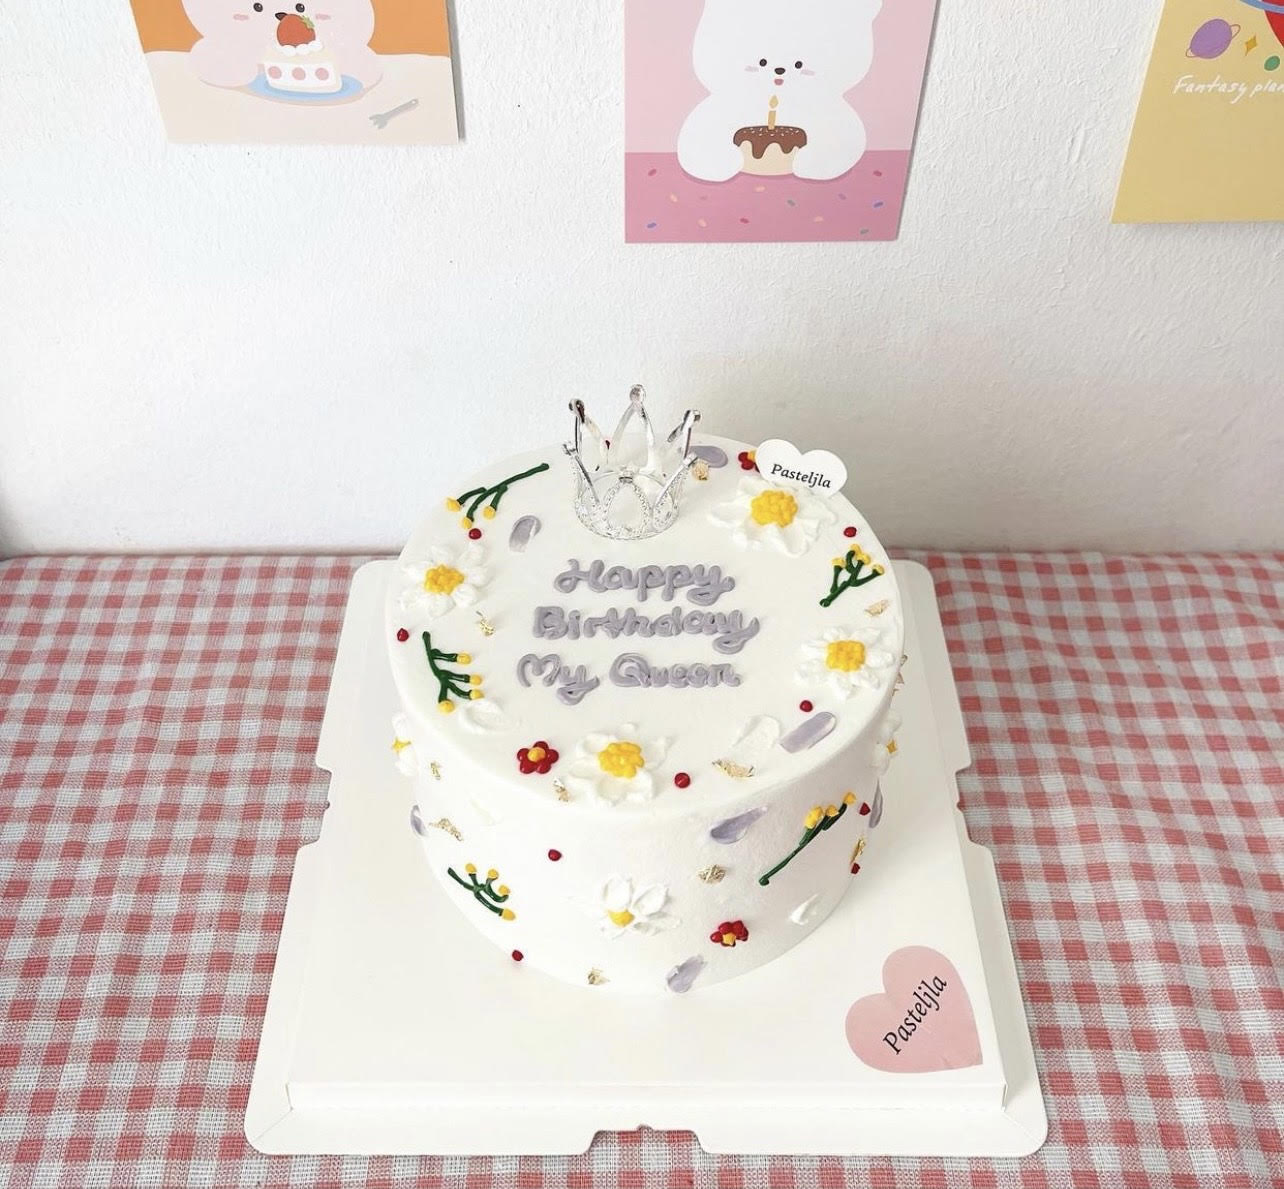 Soft tone floral cake